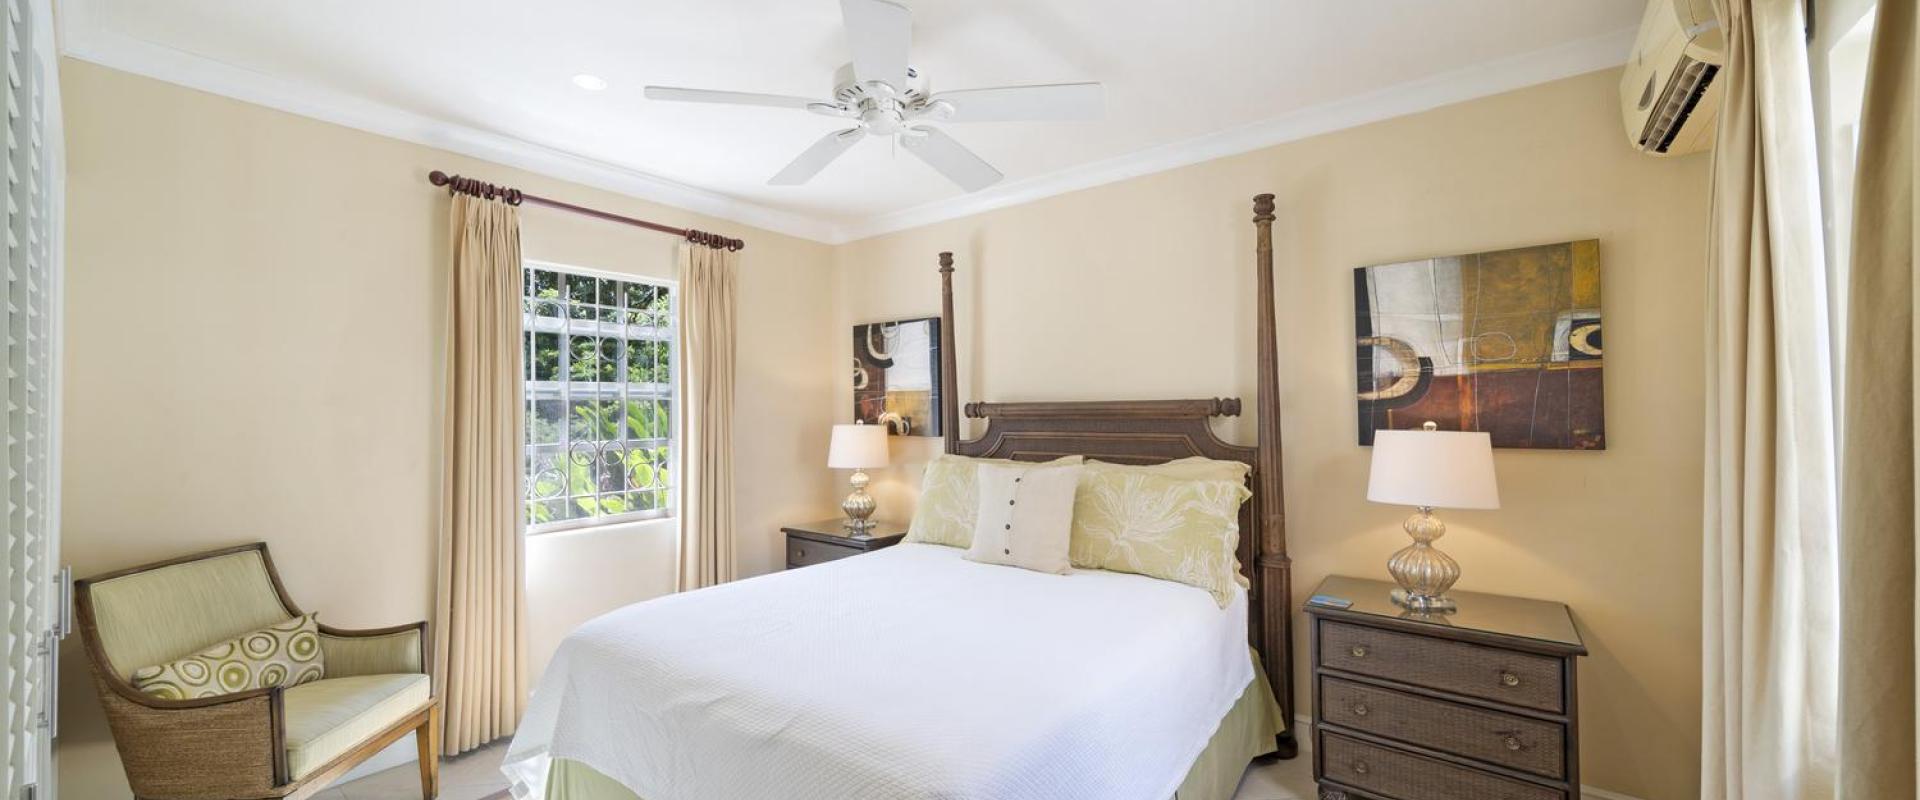 Tara Barbados 4 Bedroom Holiday Rental Villa Bedroom 3